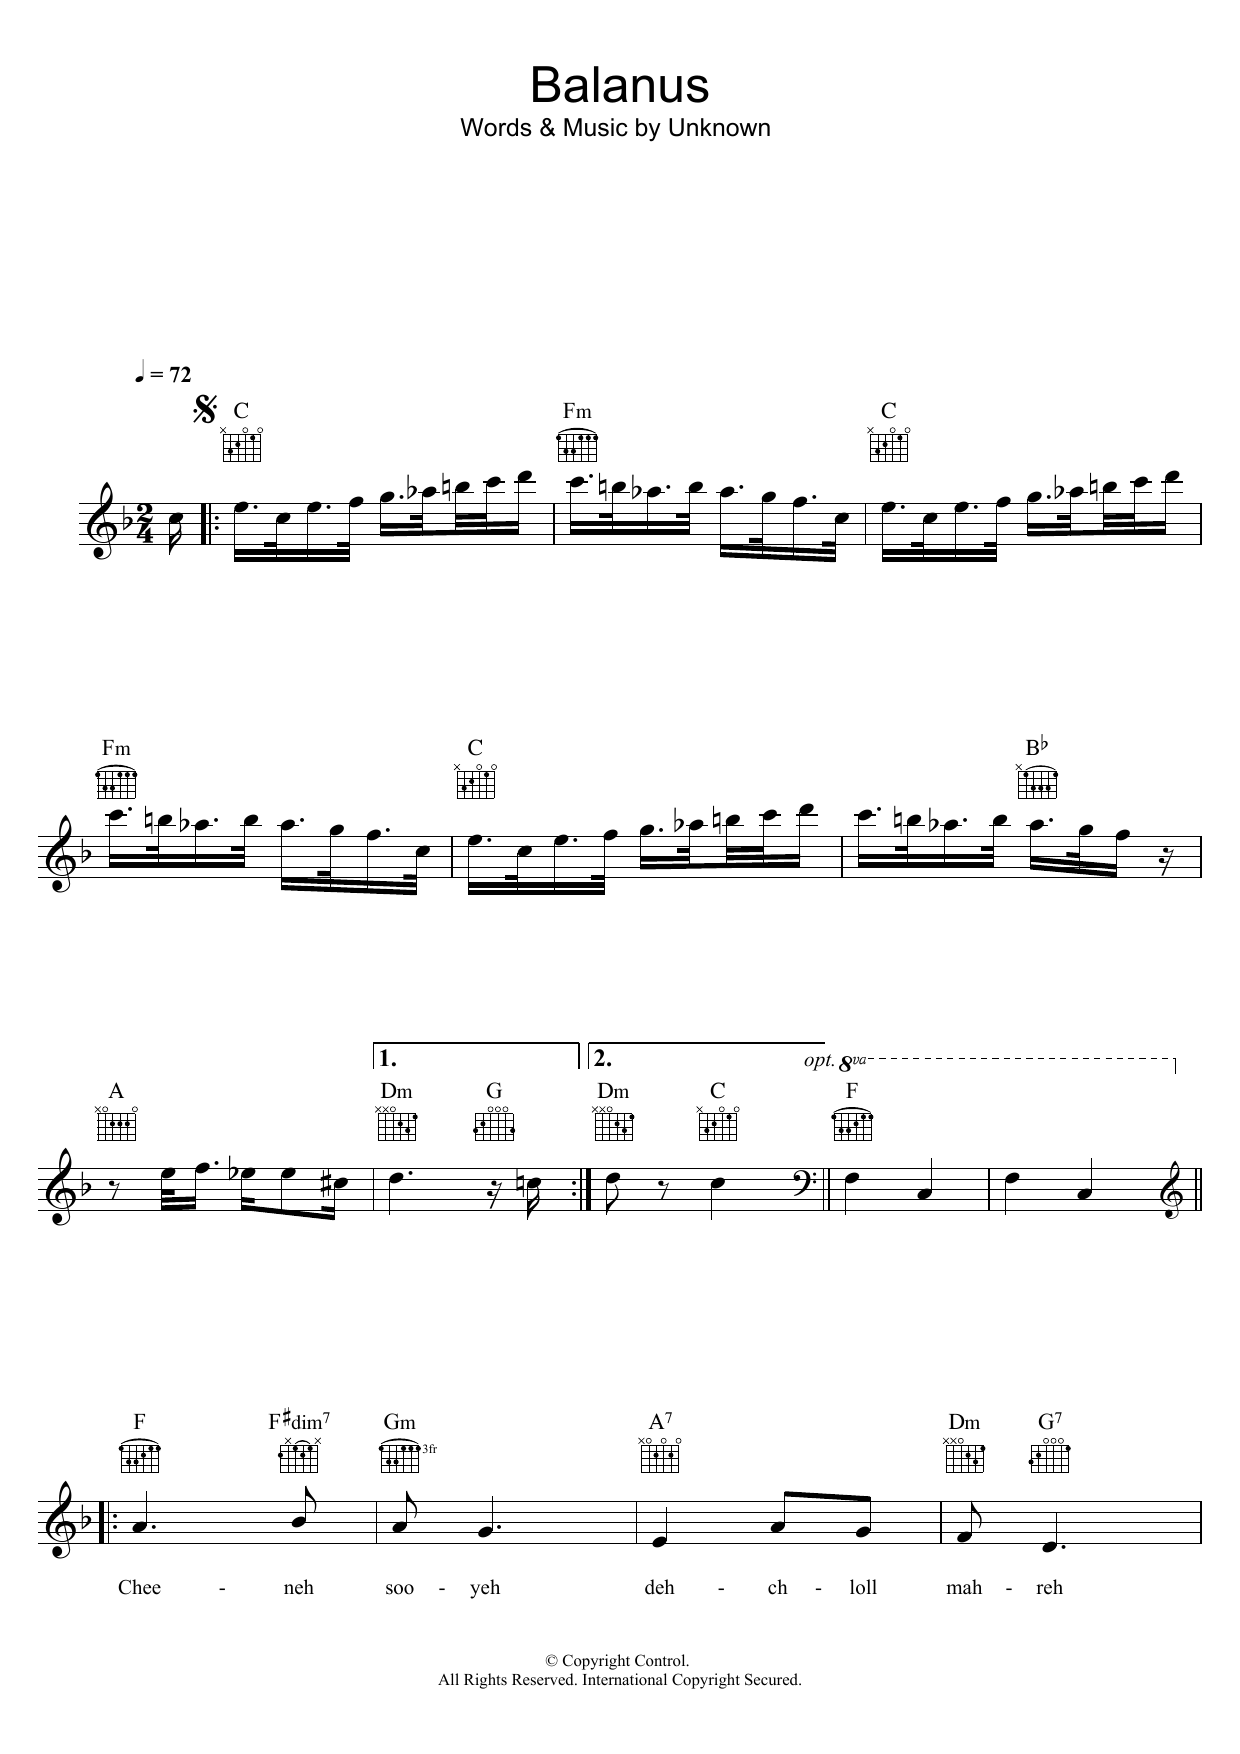 Romica Puceanu Balanus Sheet Music Notes & Chords for Melody Line, Lyrics & Chords - Download or Print PDF